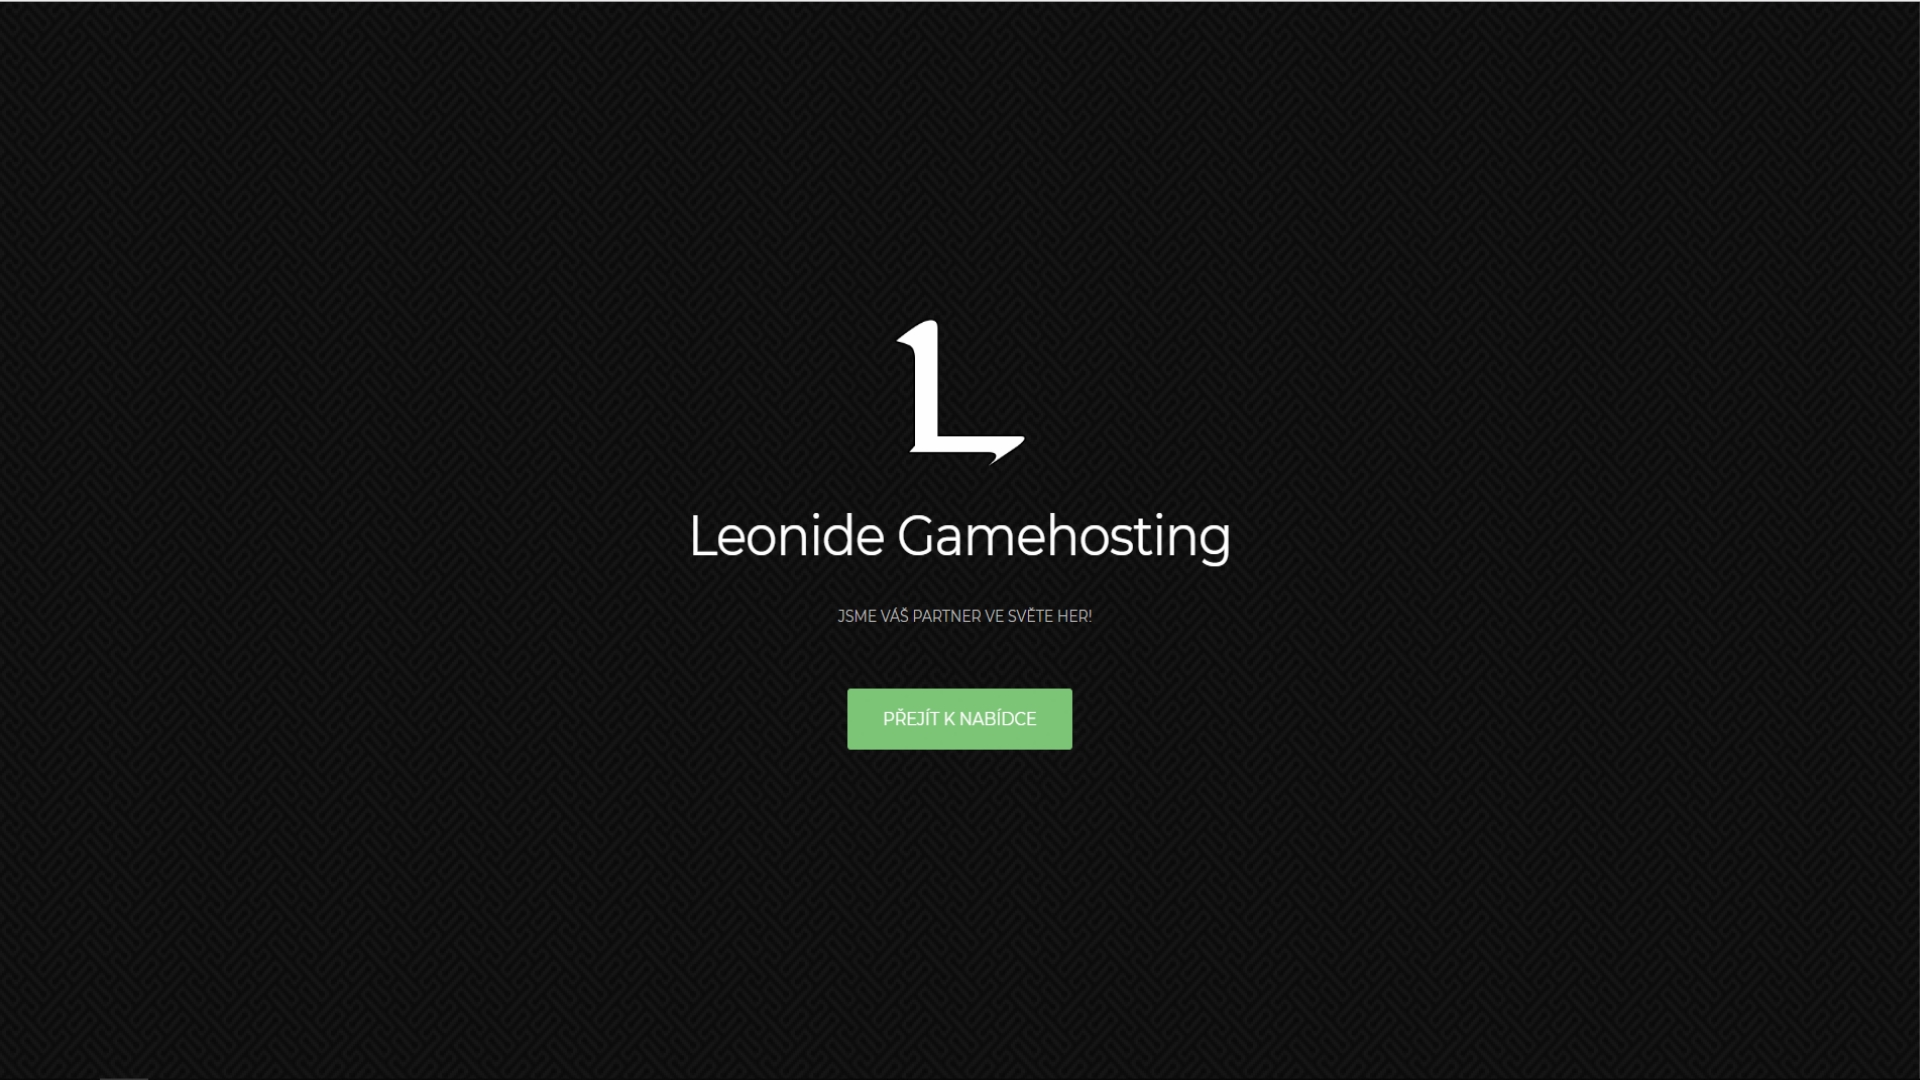 Leonide - Gamehosting (V.2)